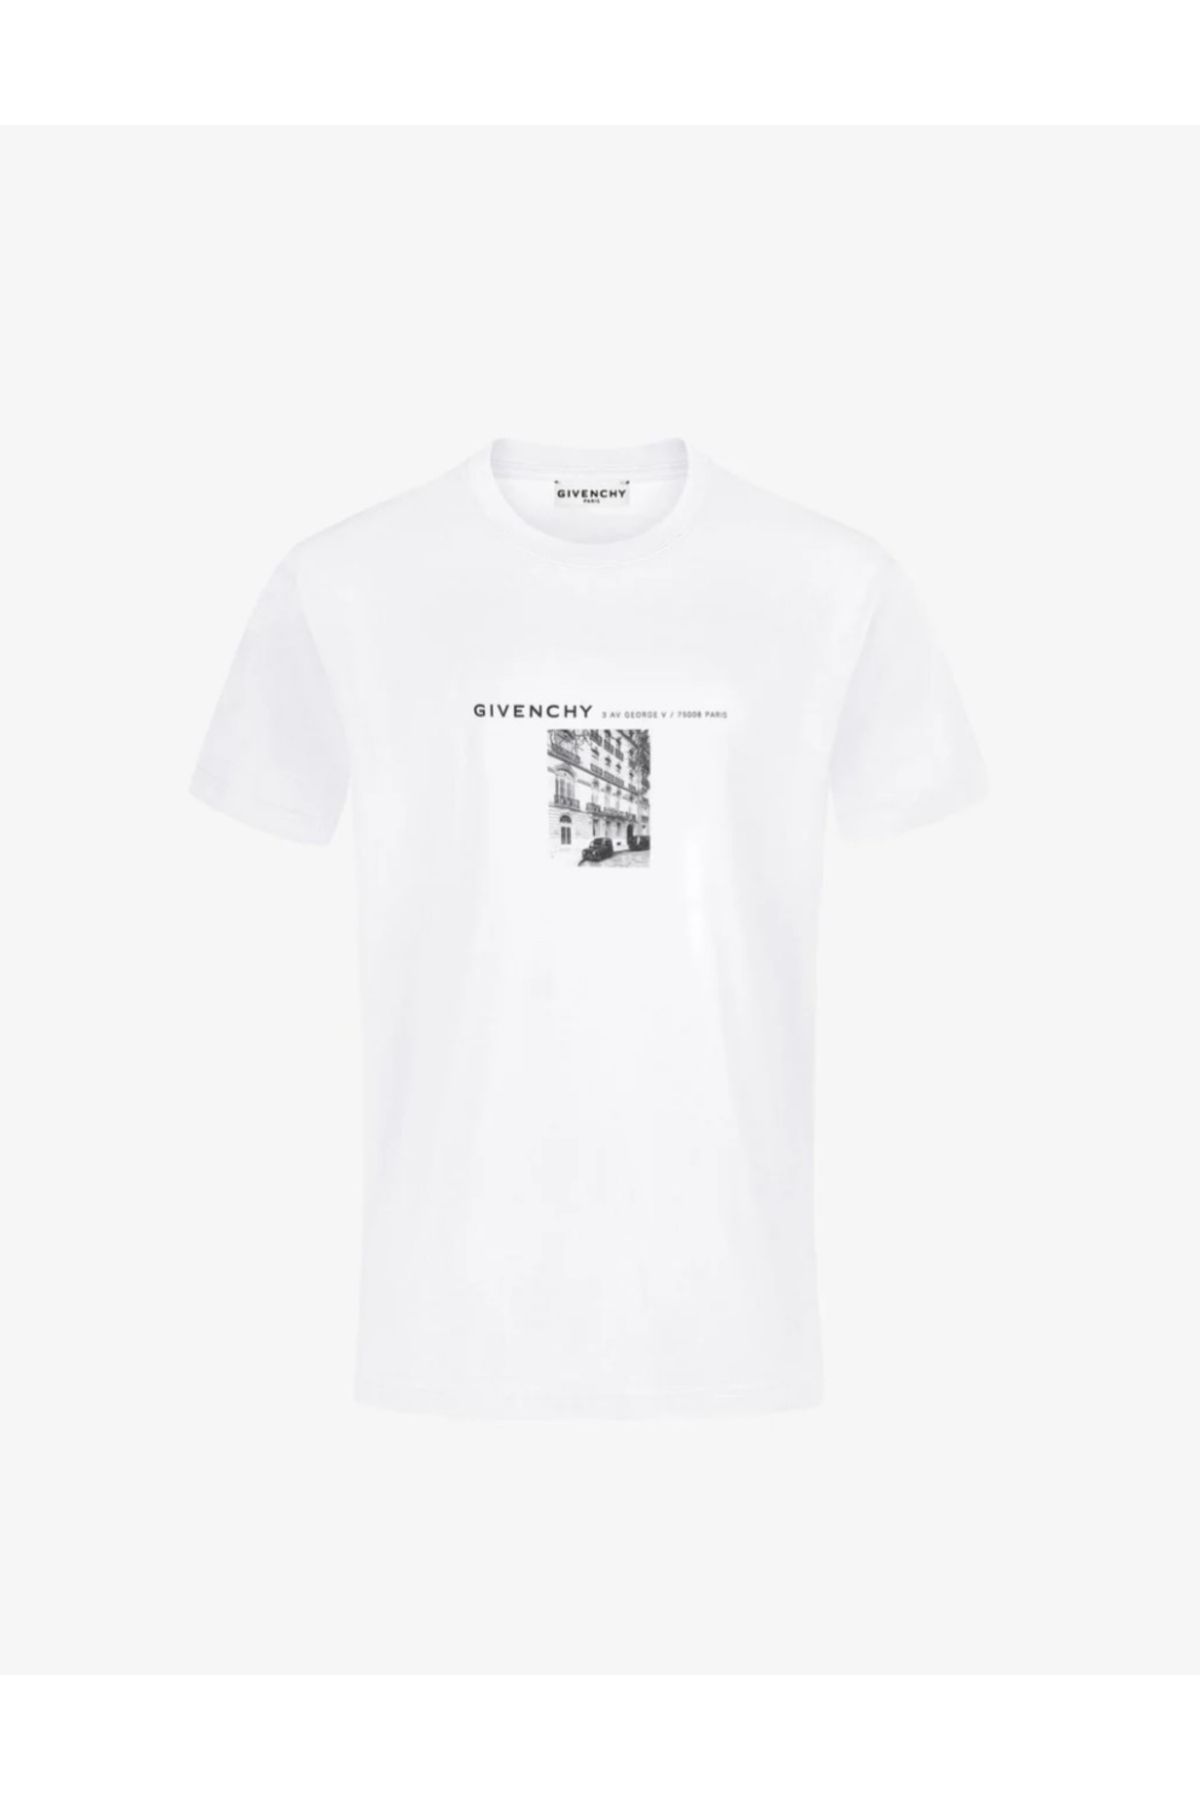 Givenchy Store Print T-Shirt